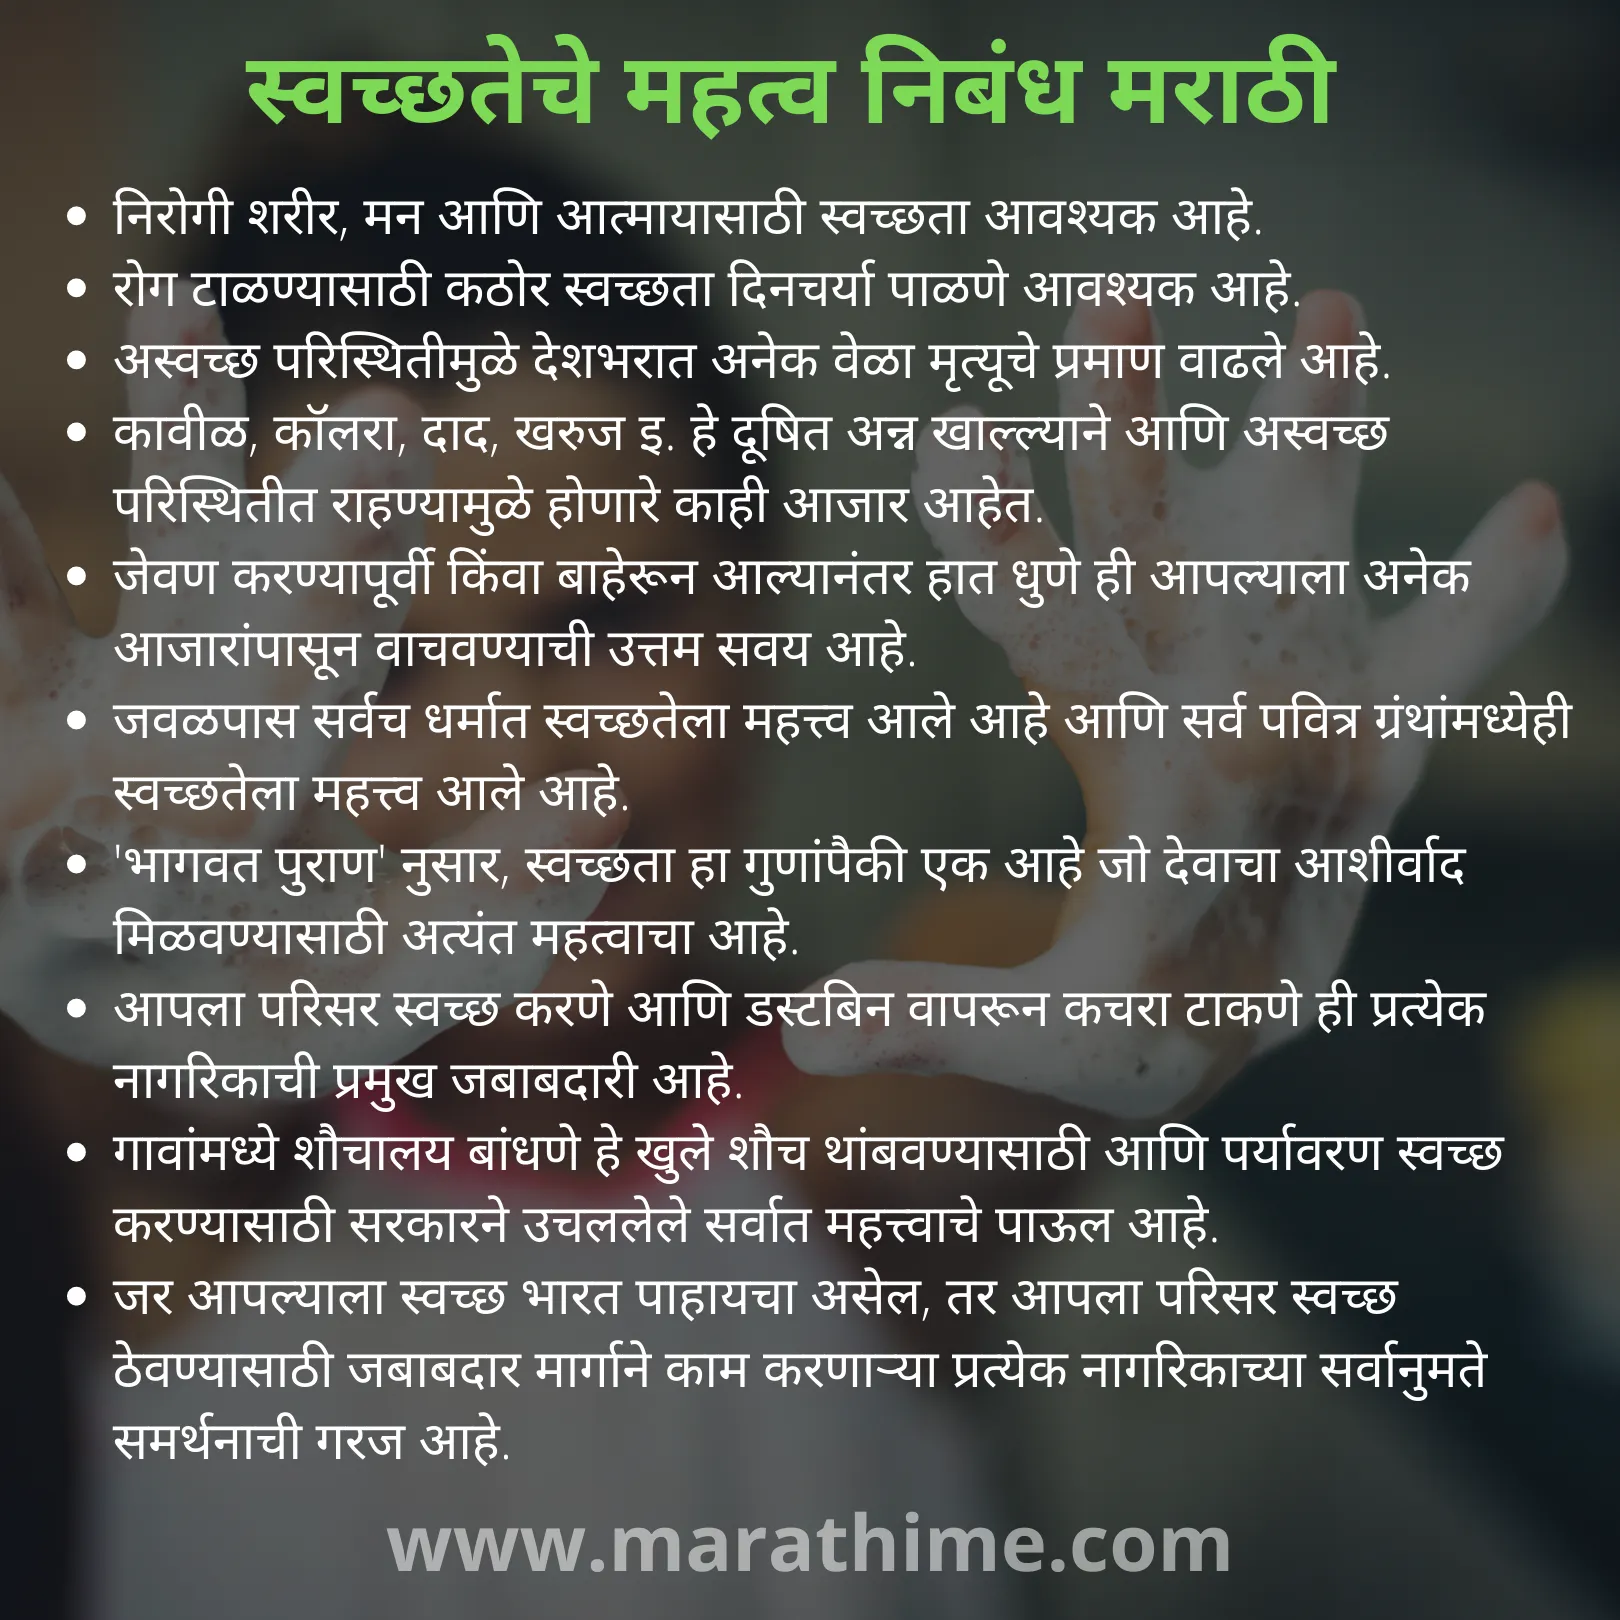 स्वच्छतेचे महत्व निबंध मराठी-10 Lines on Cleanliness in Marathi